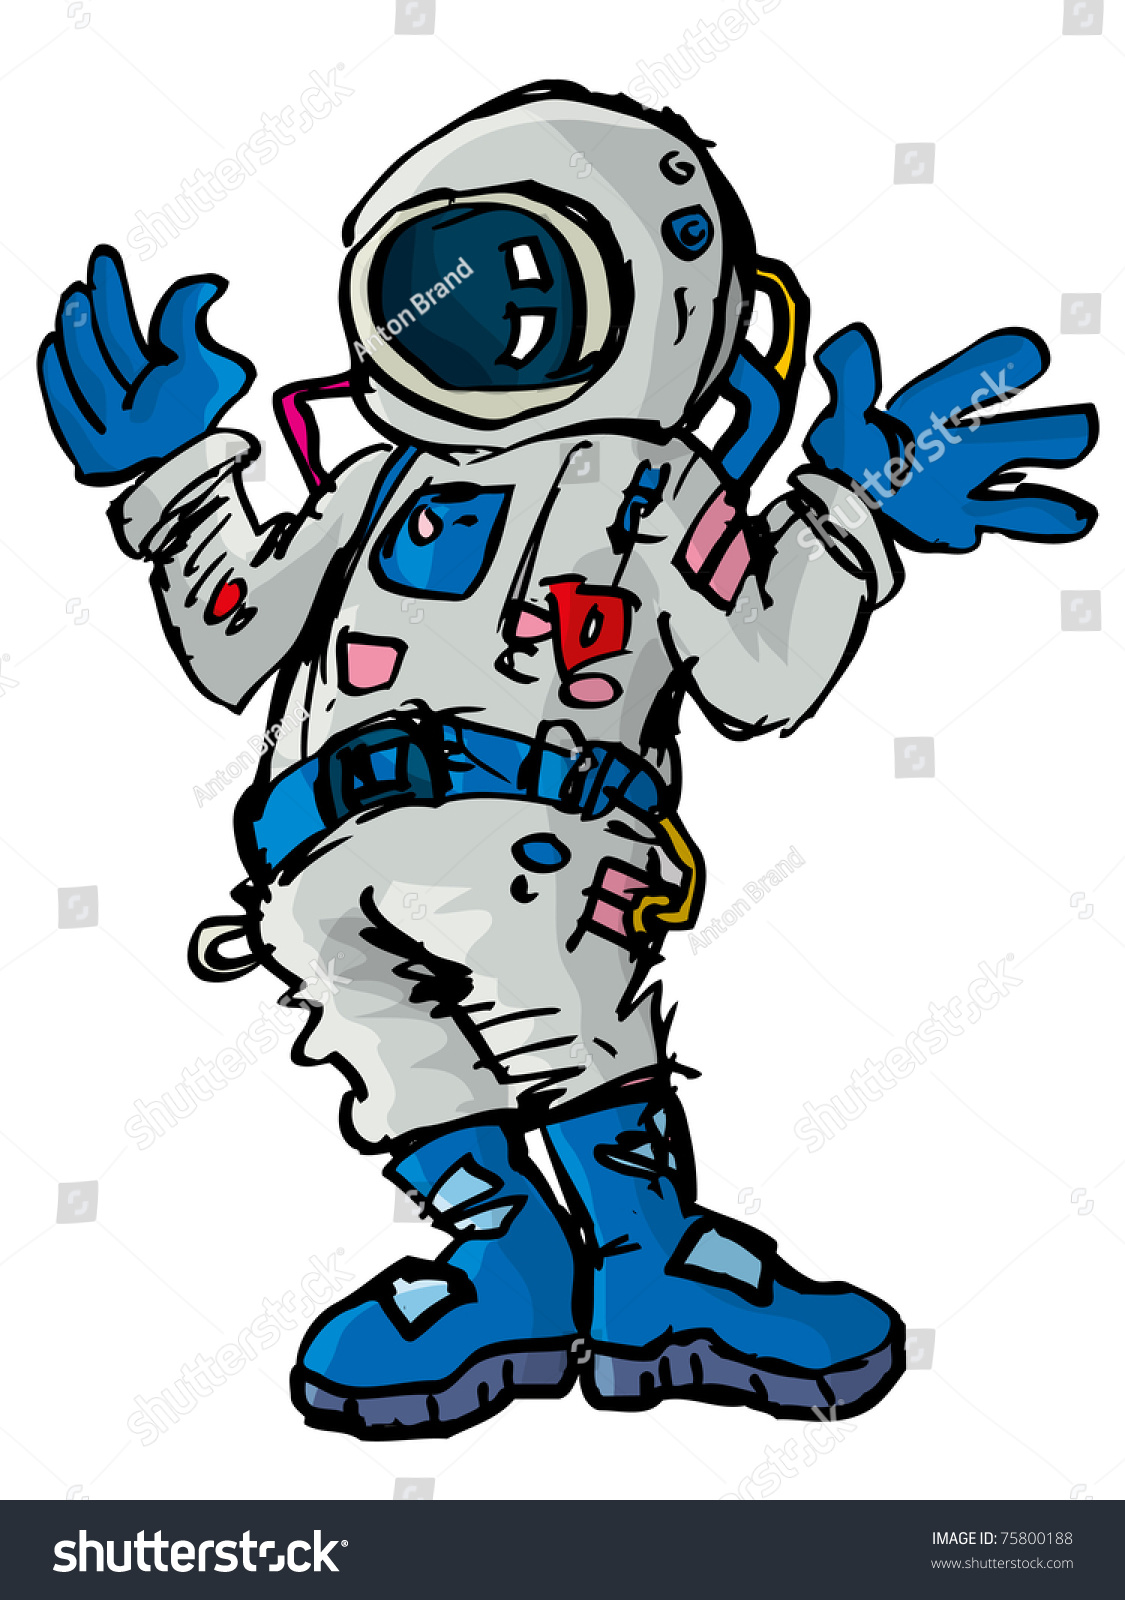 Cartoon Astronaut Space Suit Isolated On Stock Vector 75800188